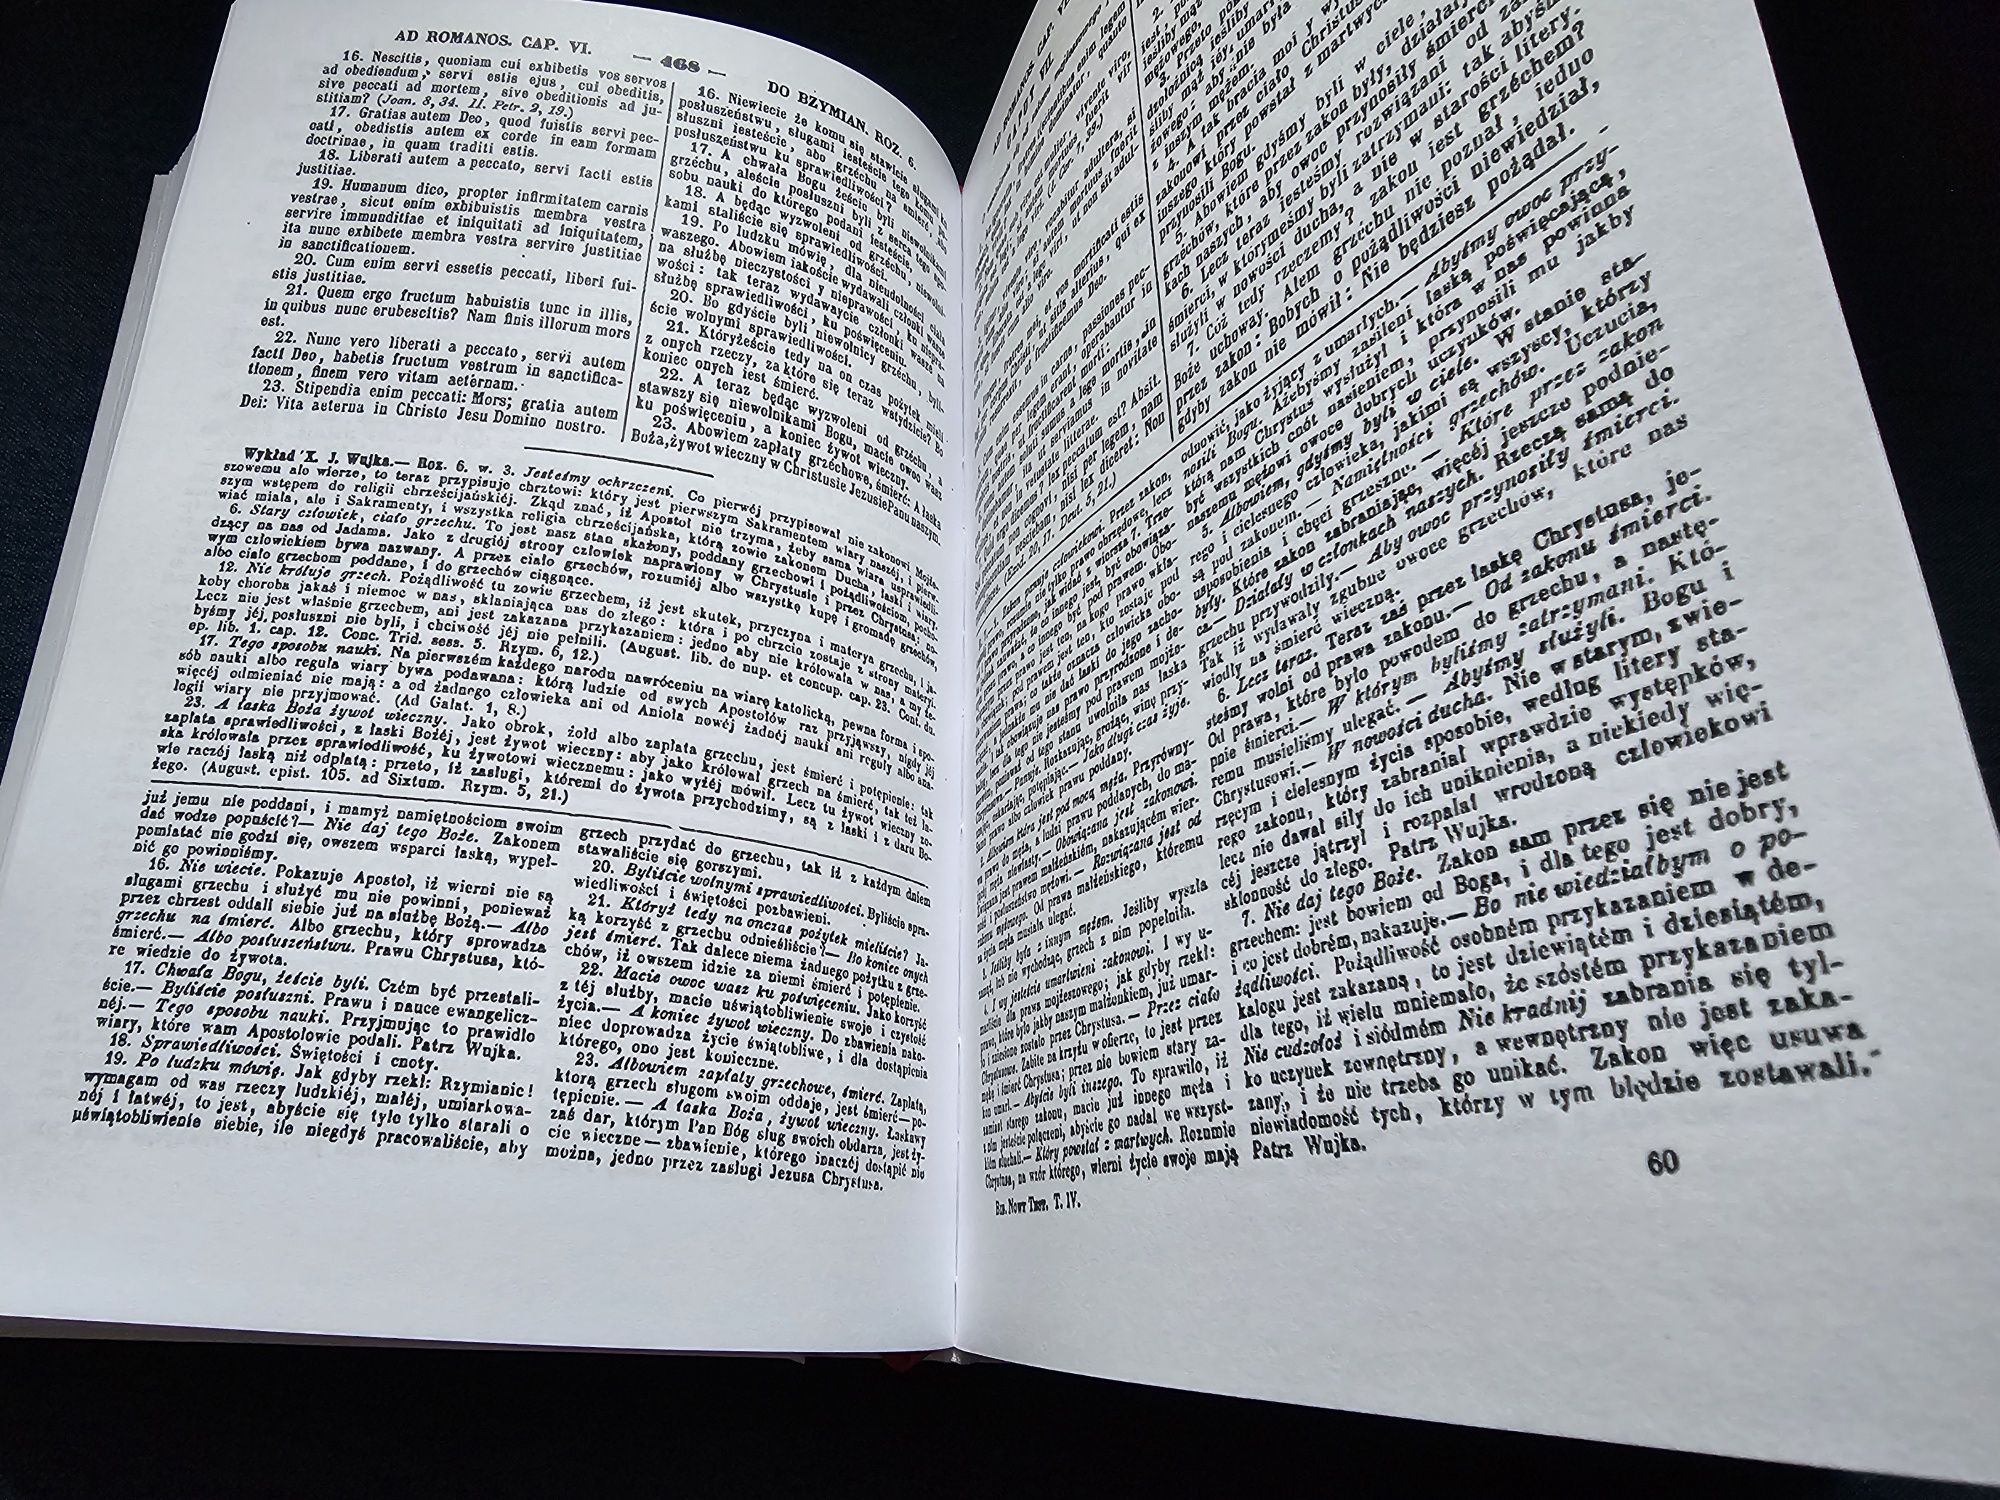 Biblia Łacińsko-polska NOWY TESTAMENT Antyk reprint 1864 rok